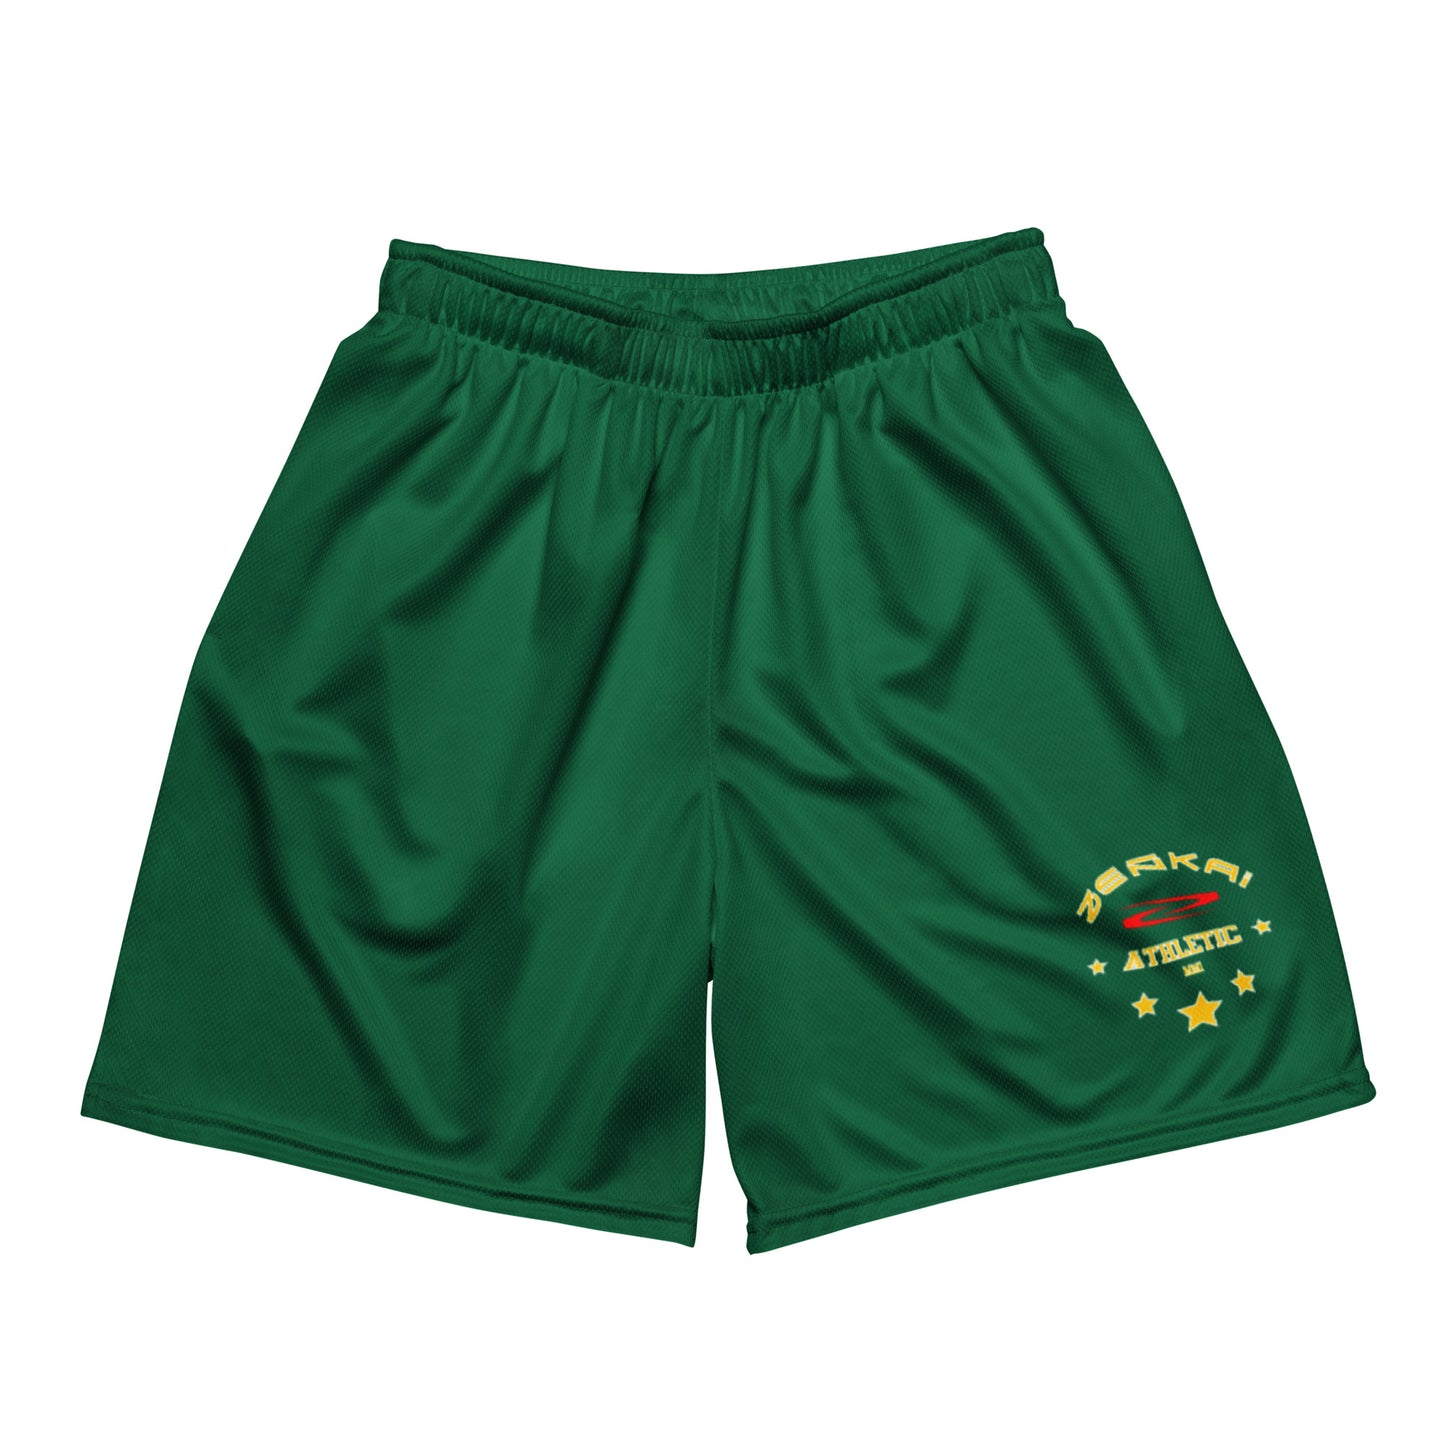 ZENKAI Athletic mesh shorts